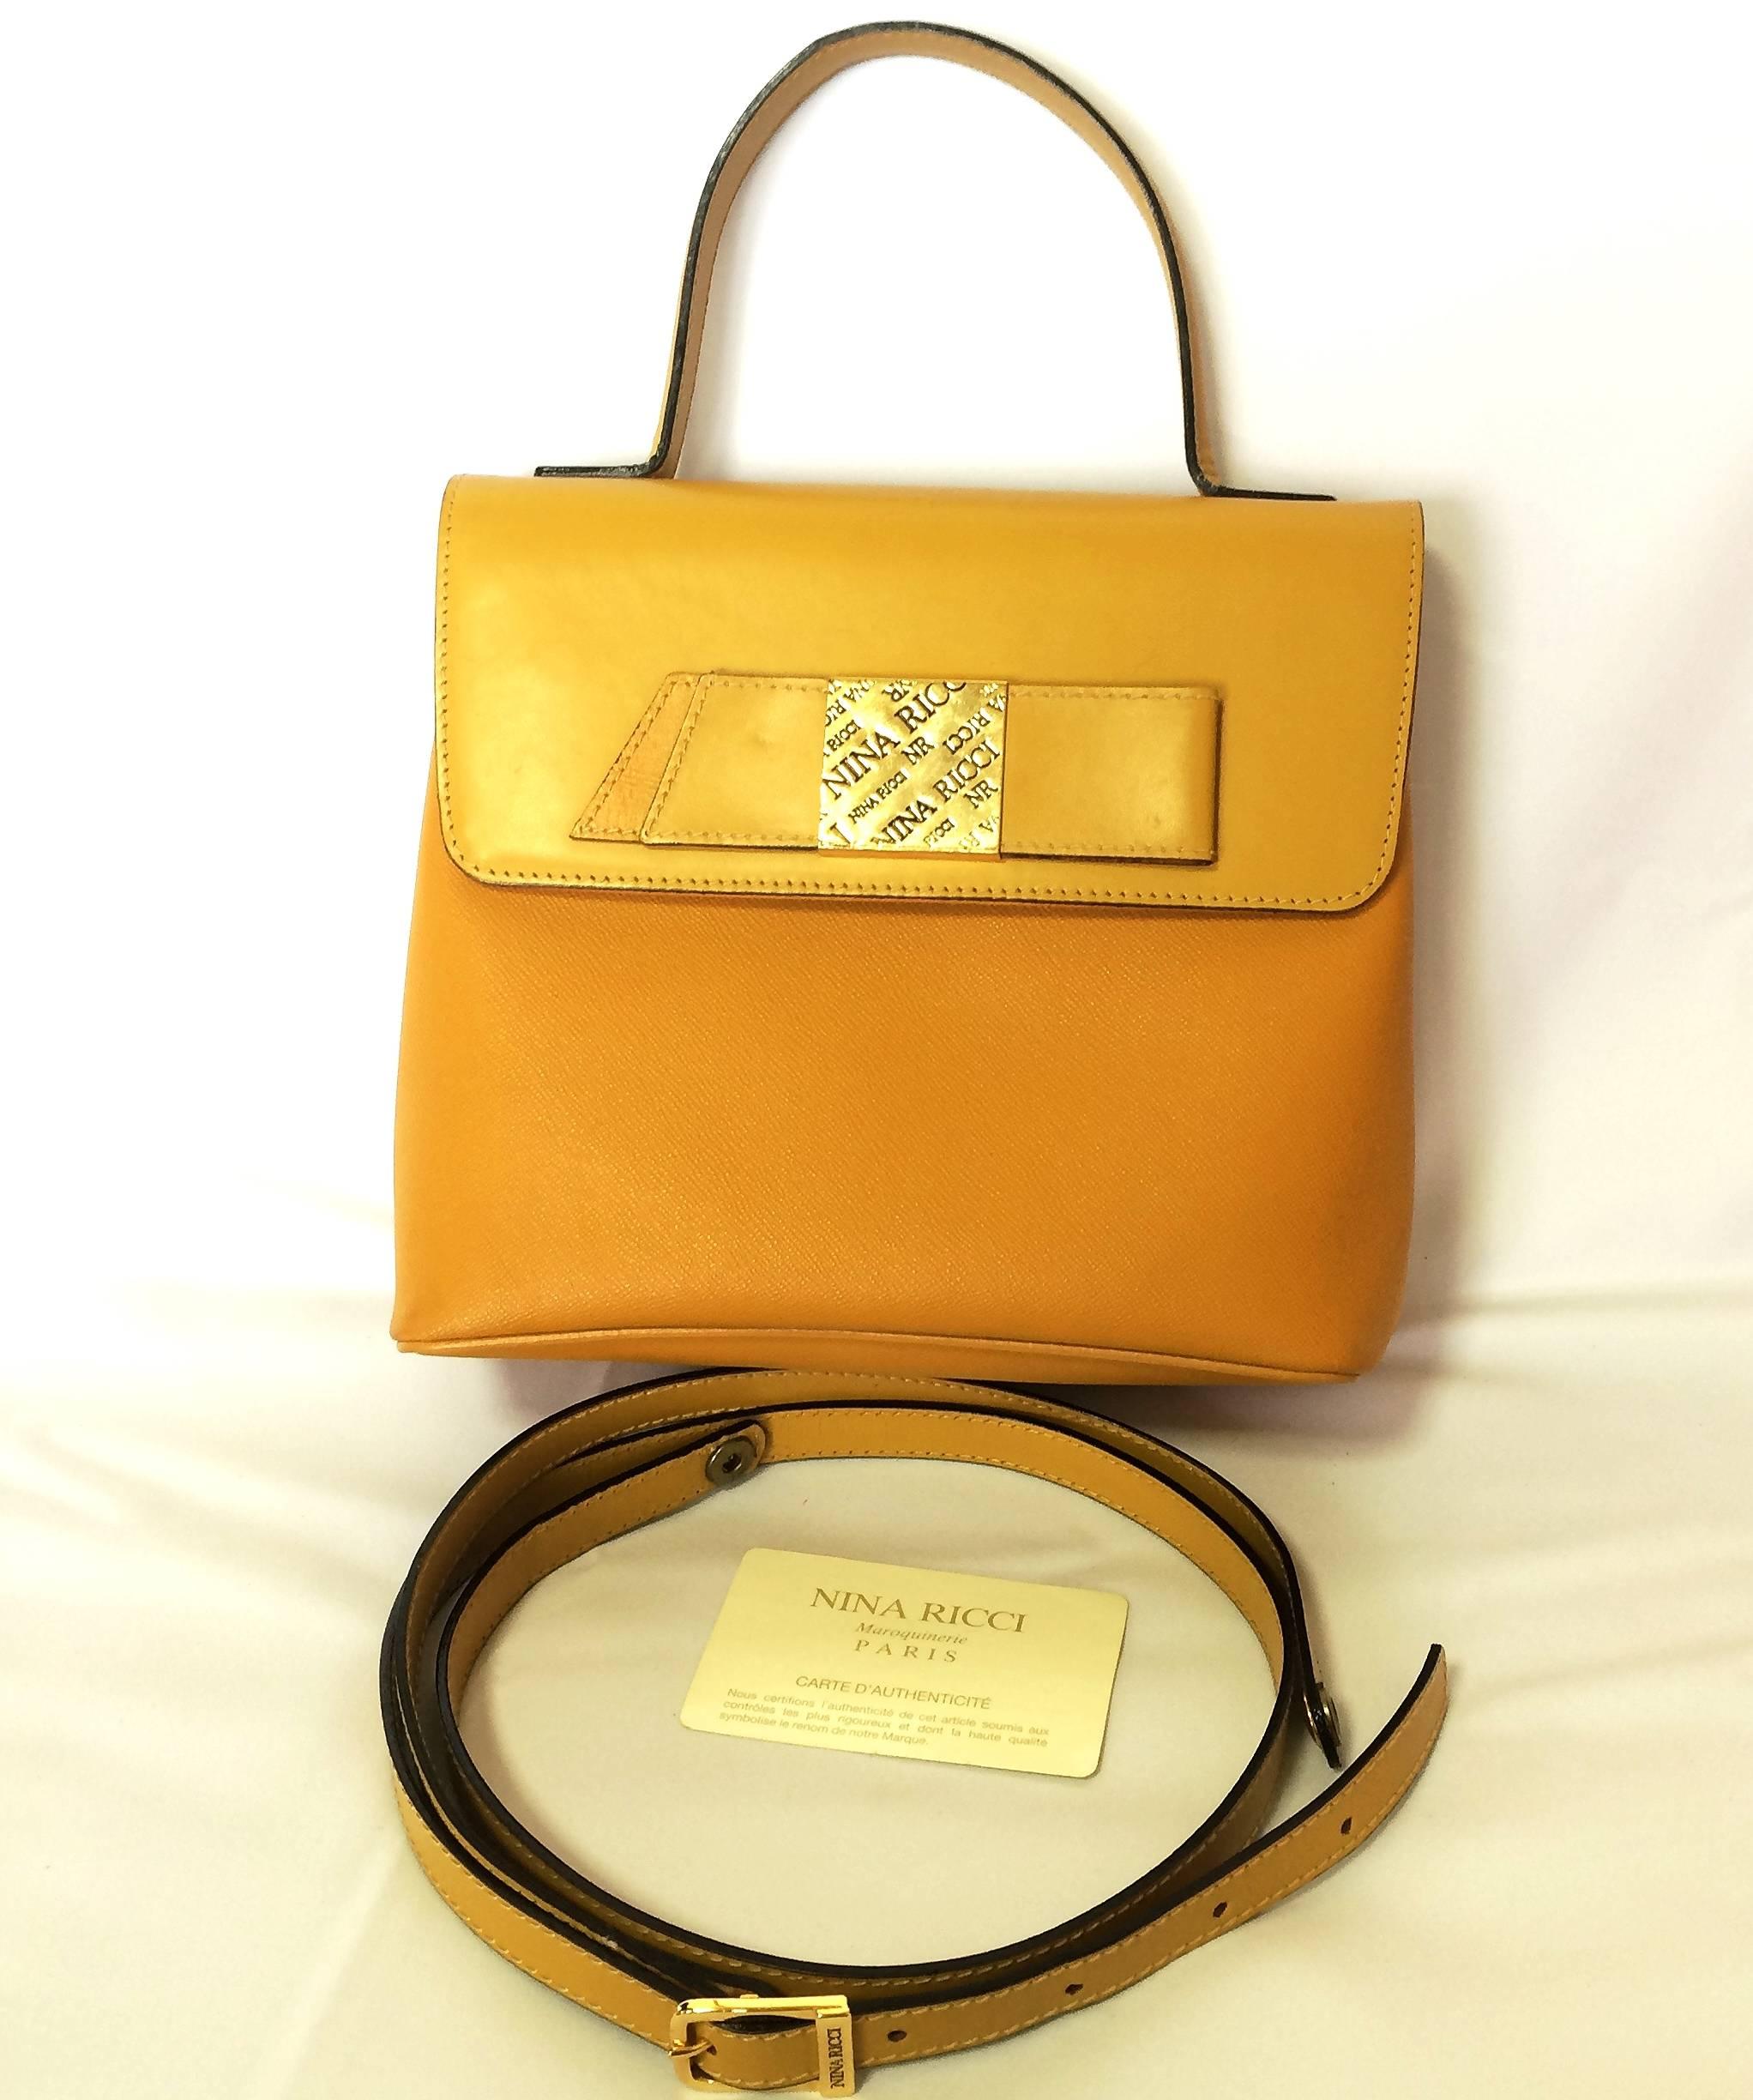 MINT. Vintage Nina Ricci yellow leather handbag purse with shoulder strap. 2